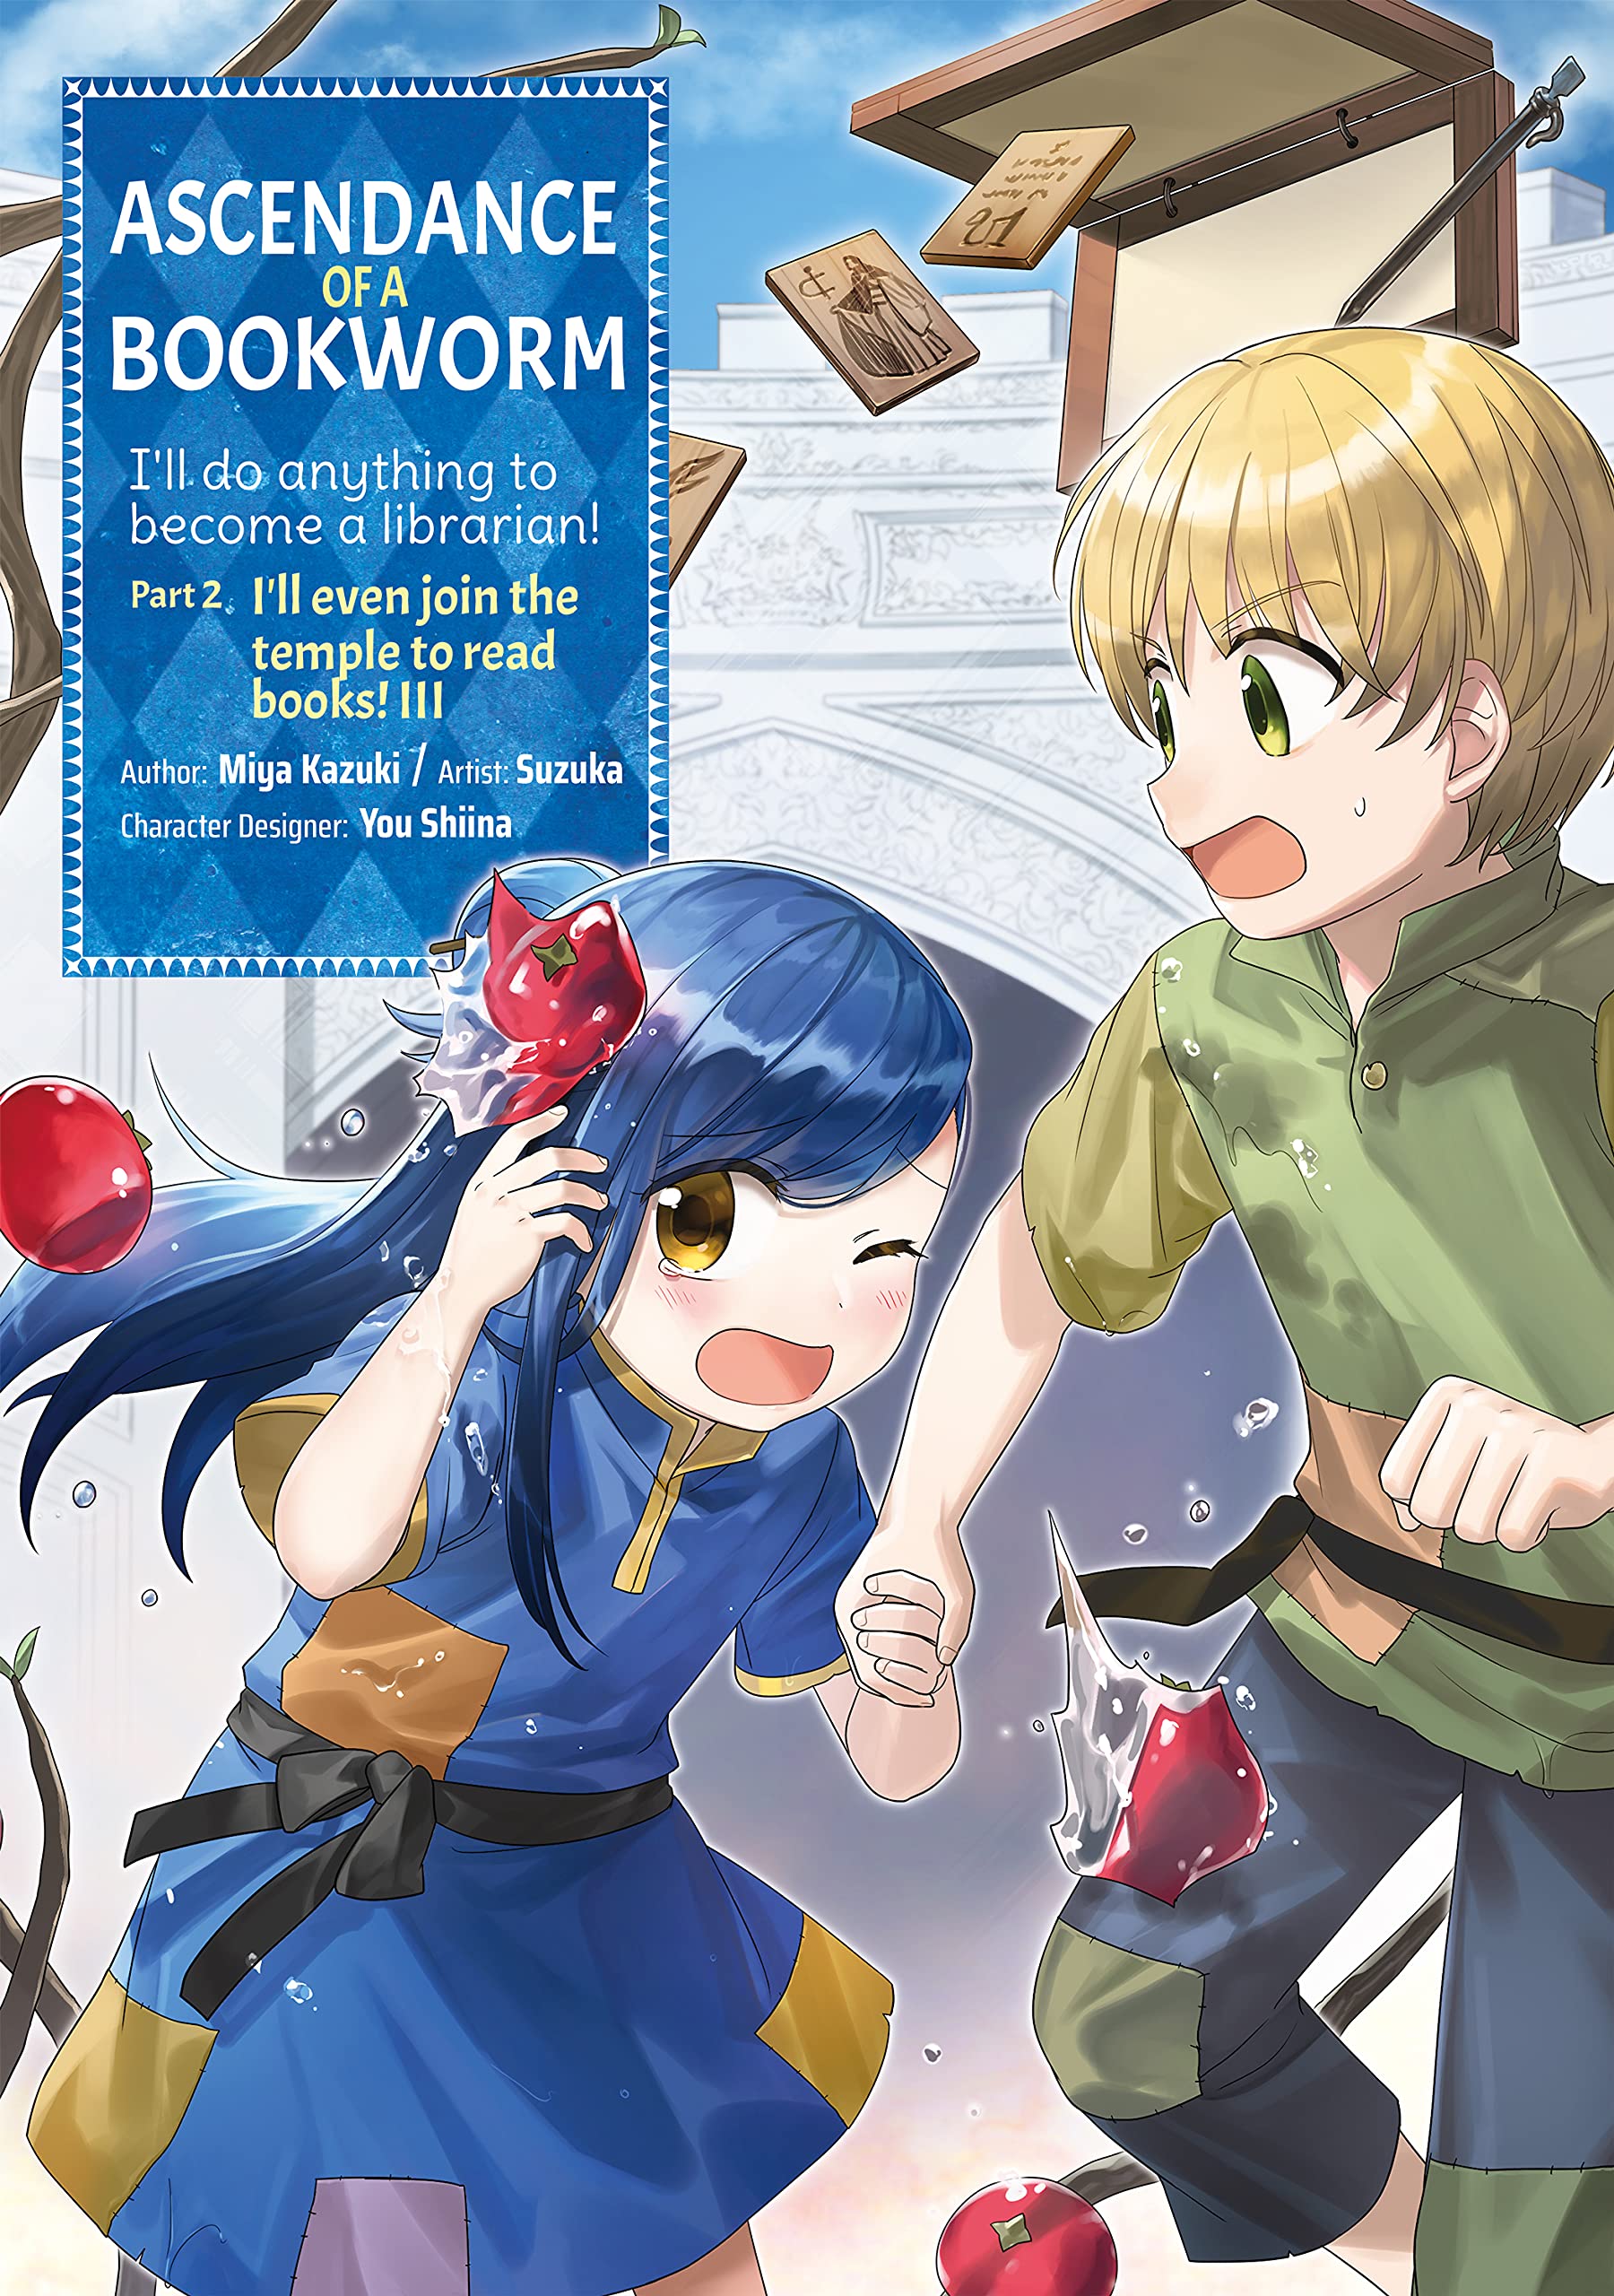 Ascendance of a Bookworm (Manga) Part 2 Volume 3 ( Ascendance of a Bookworm (Manga) Part 2 #3 ) - SureShot Books Publishing LLC